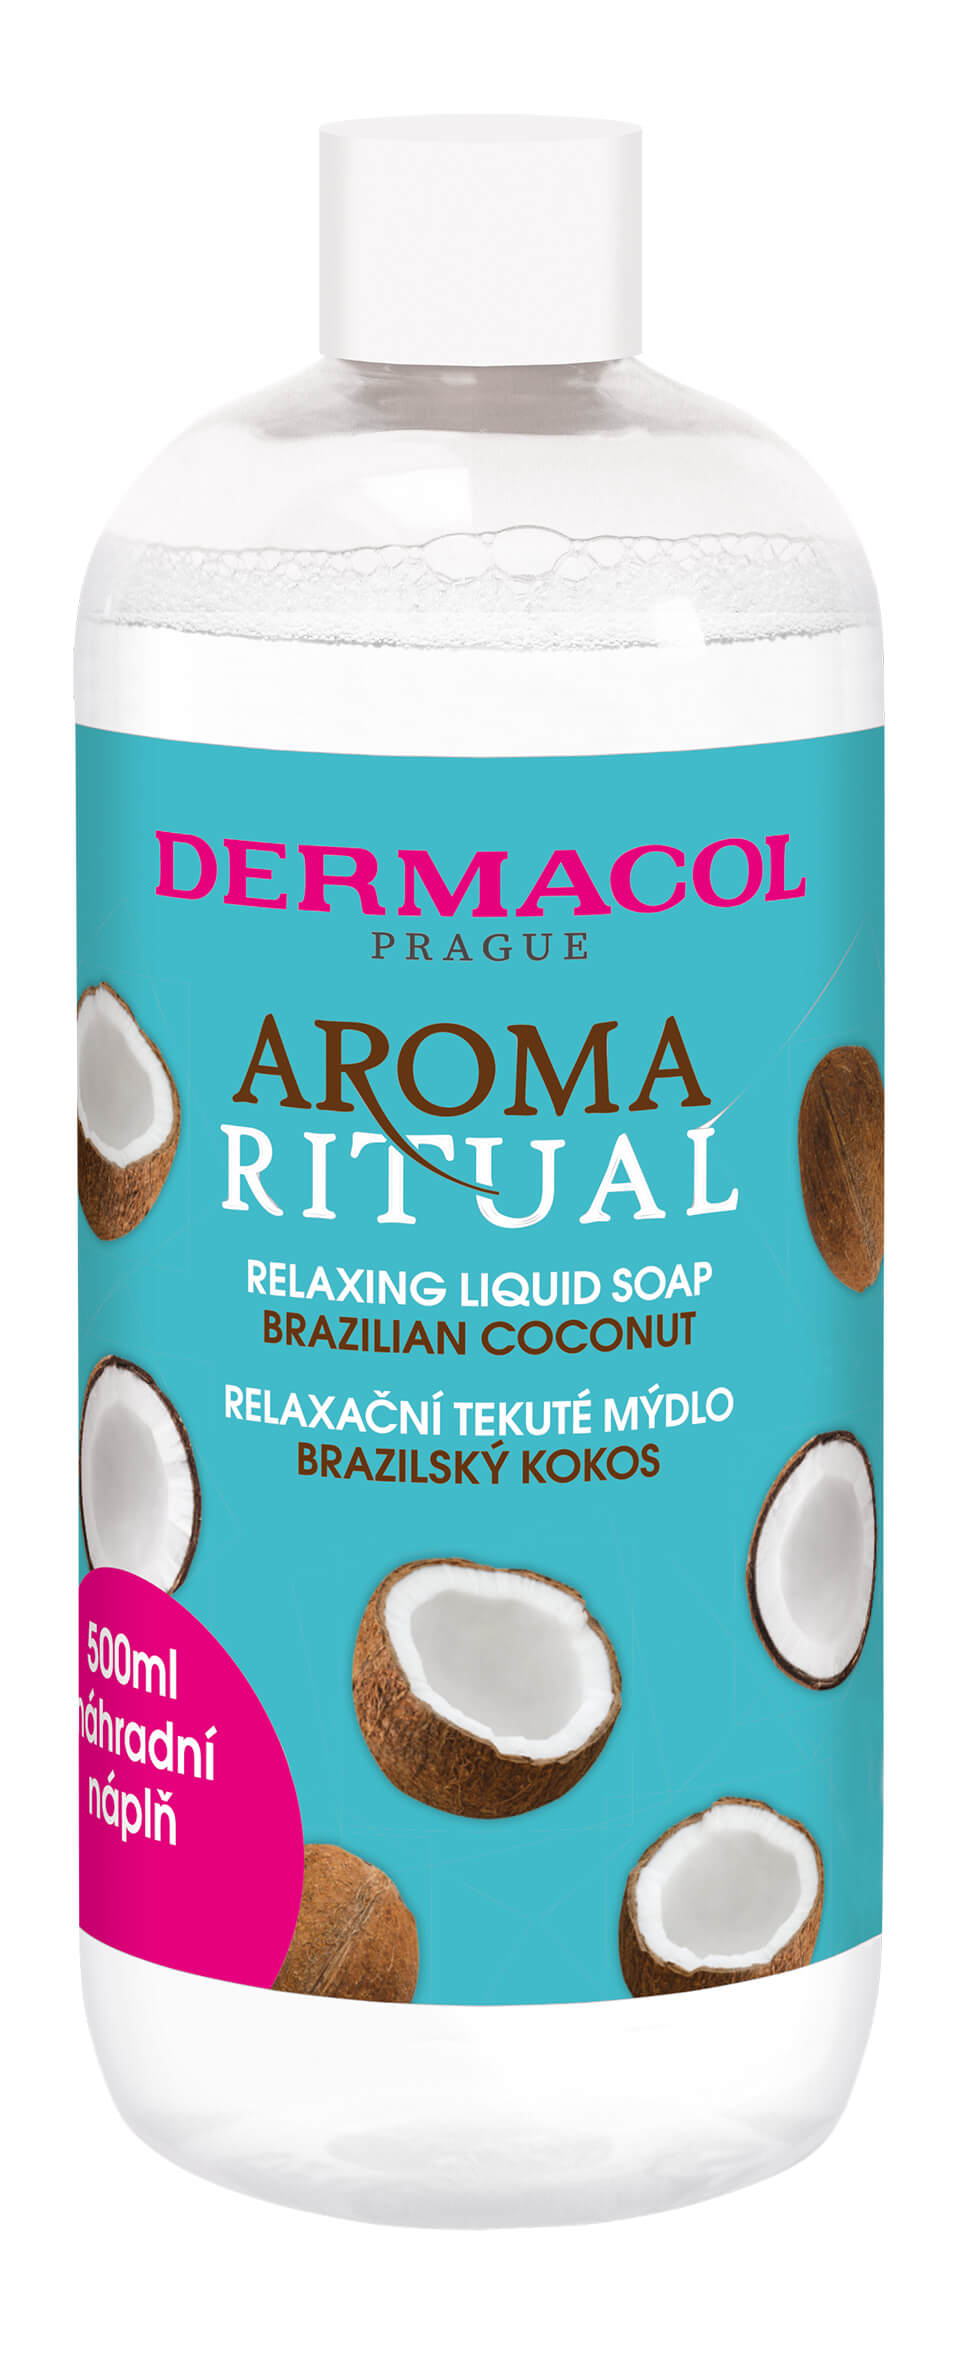 Relaxačné tekuté mydlo Aroma Ritual Brazílsky kokos (Relaxing Liquid Soap) - náhradná náplň 500 ml